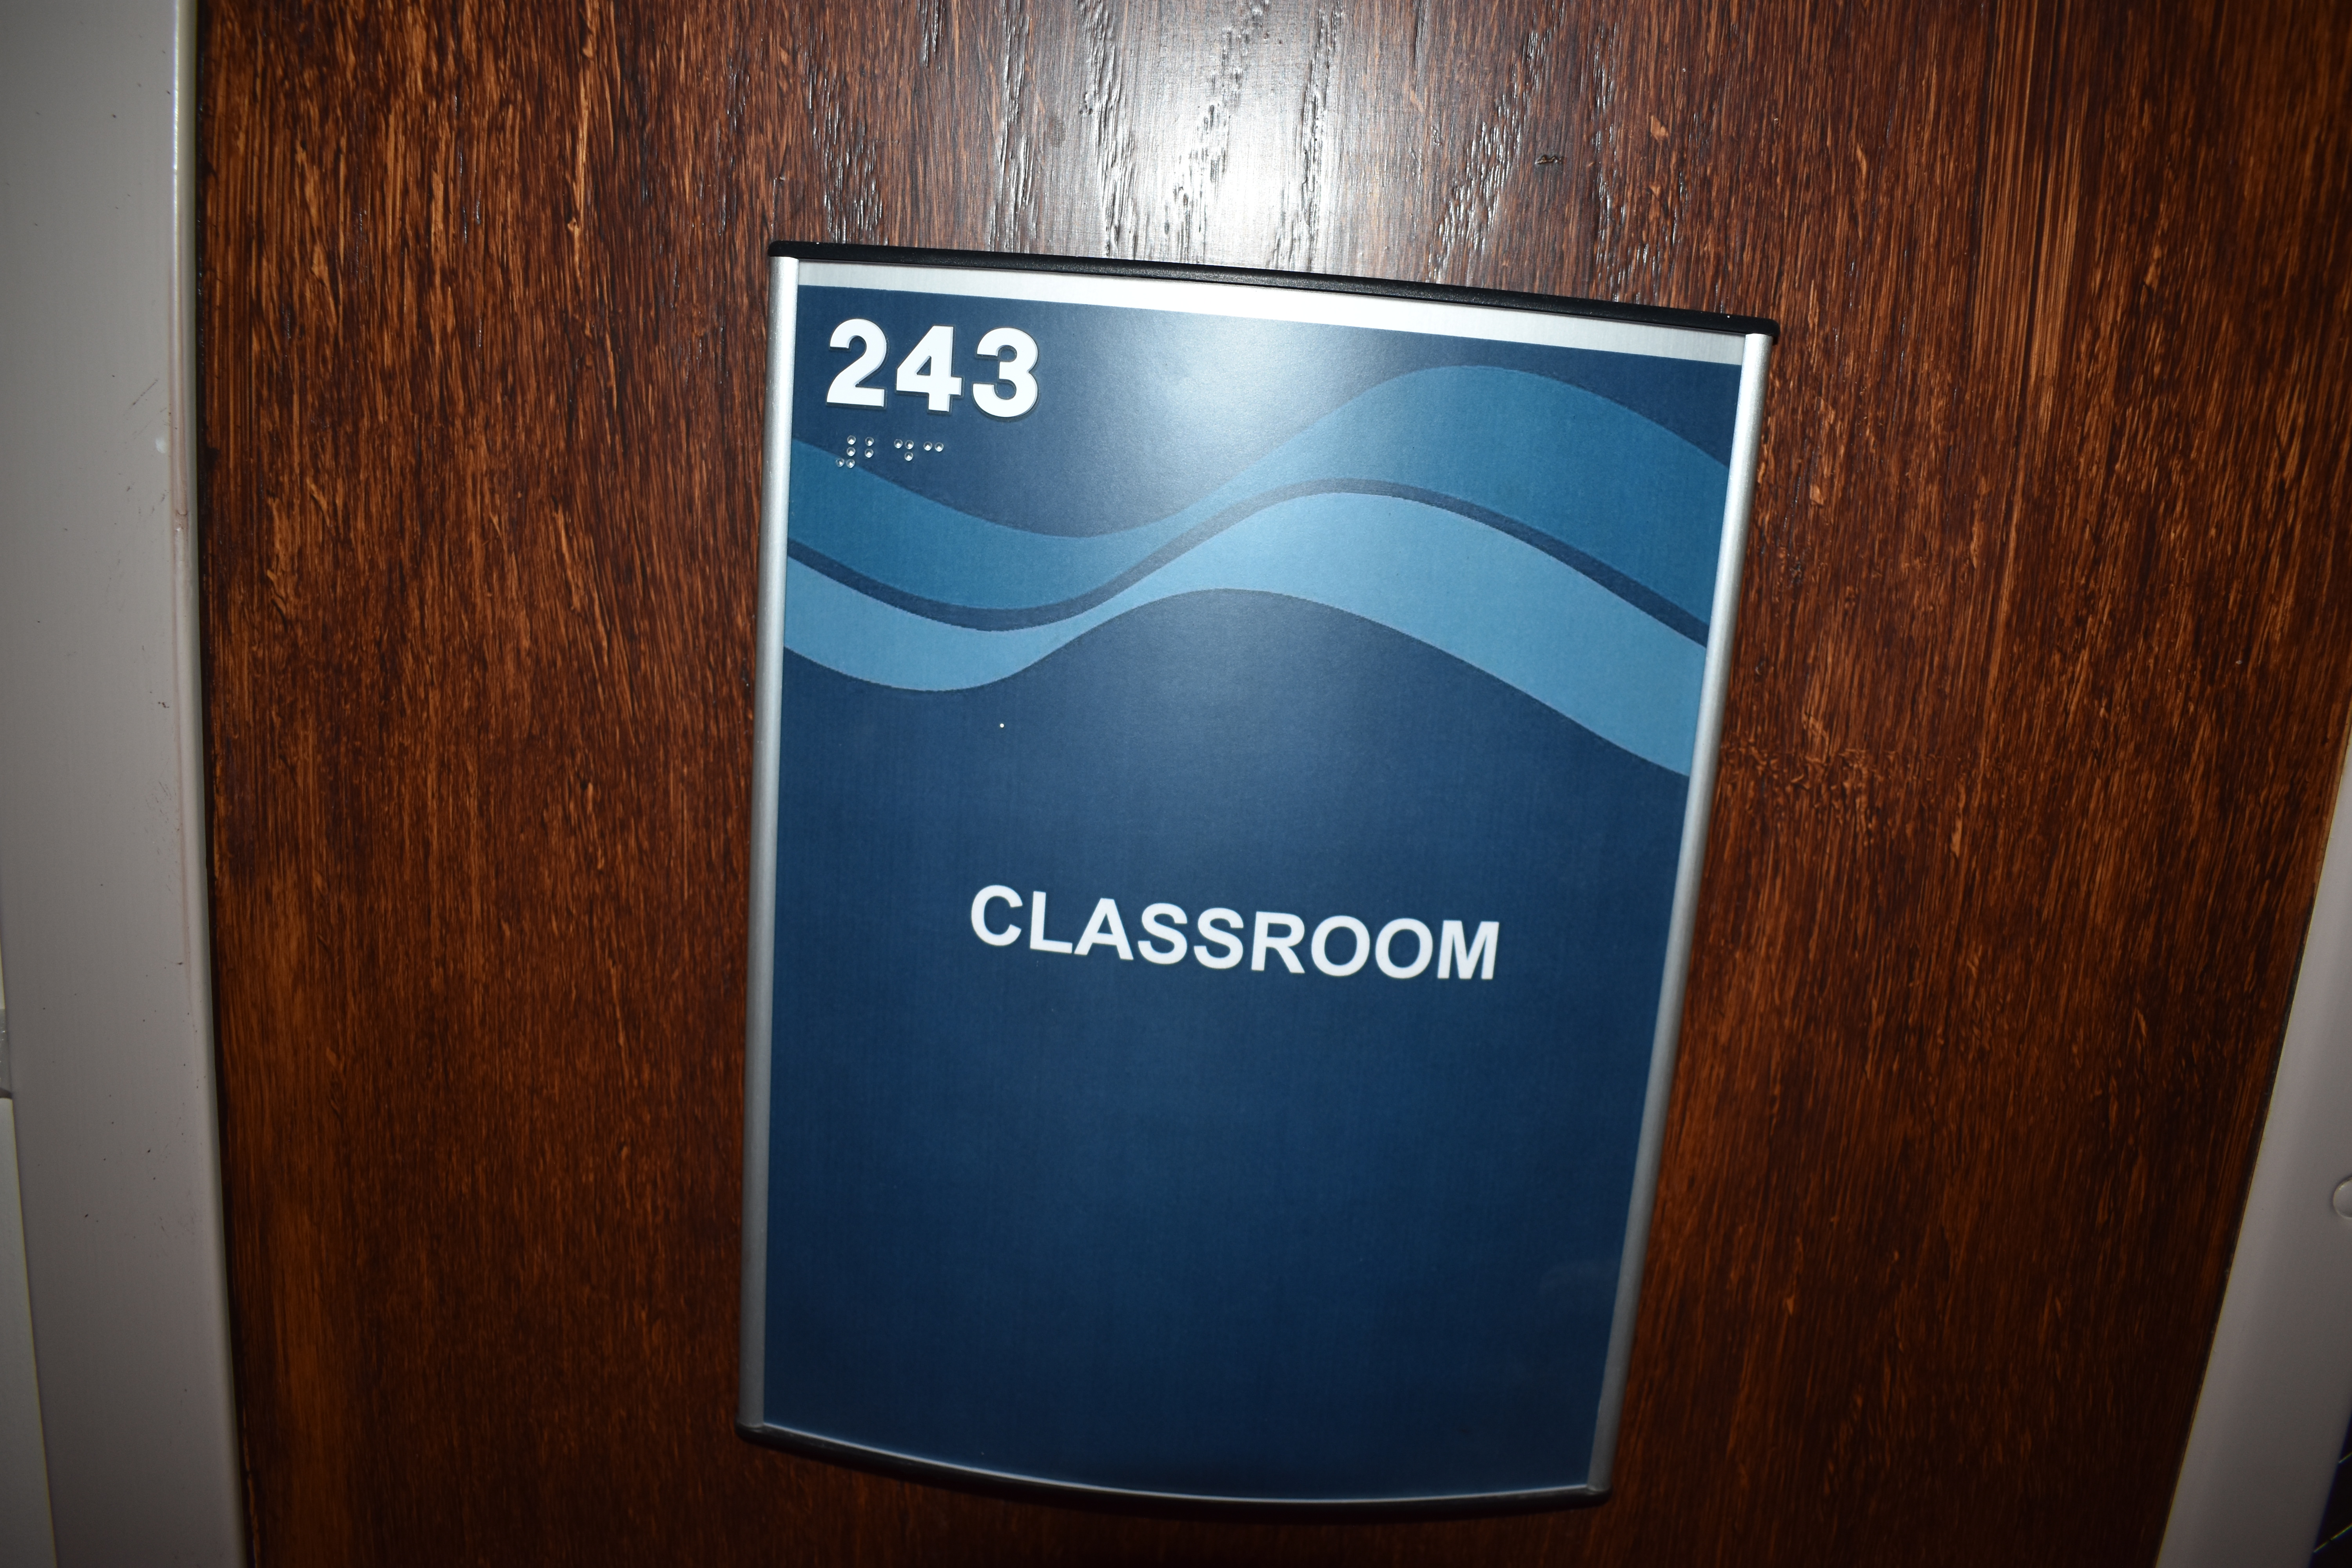 Classroom 243